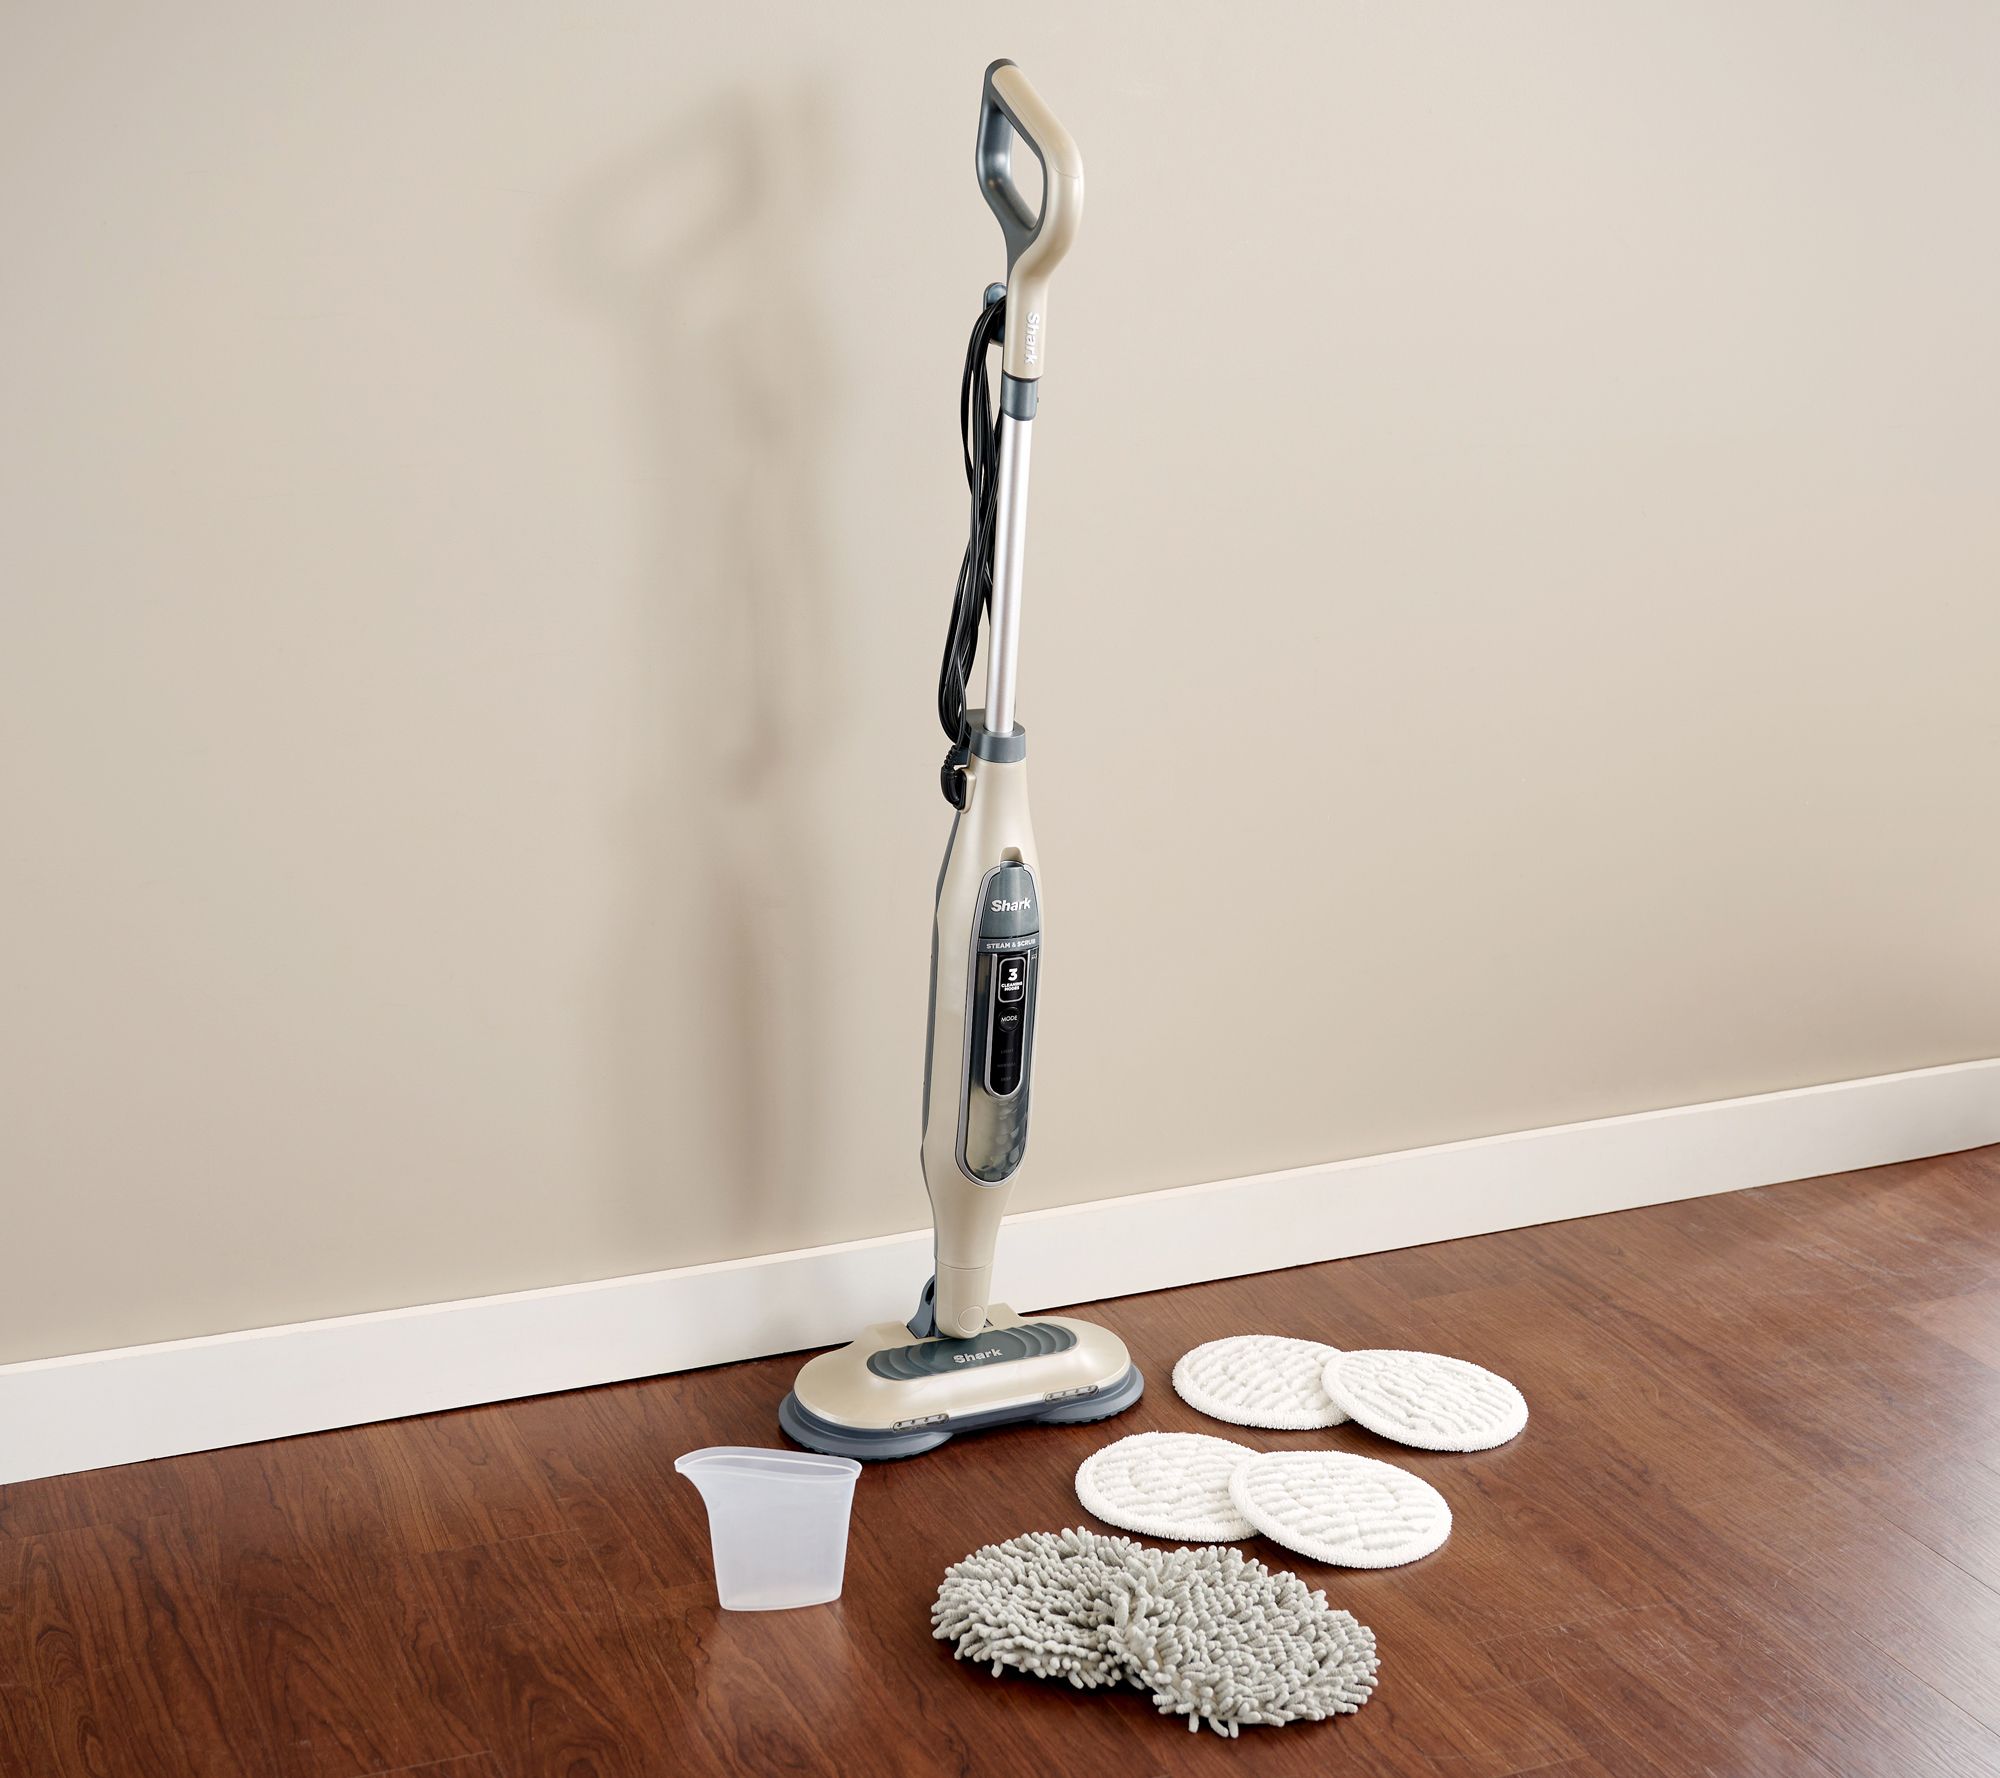 Shark Professional Steam Pocket mop for hard floors,deep cleaning